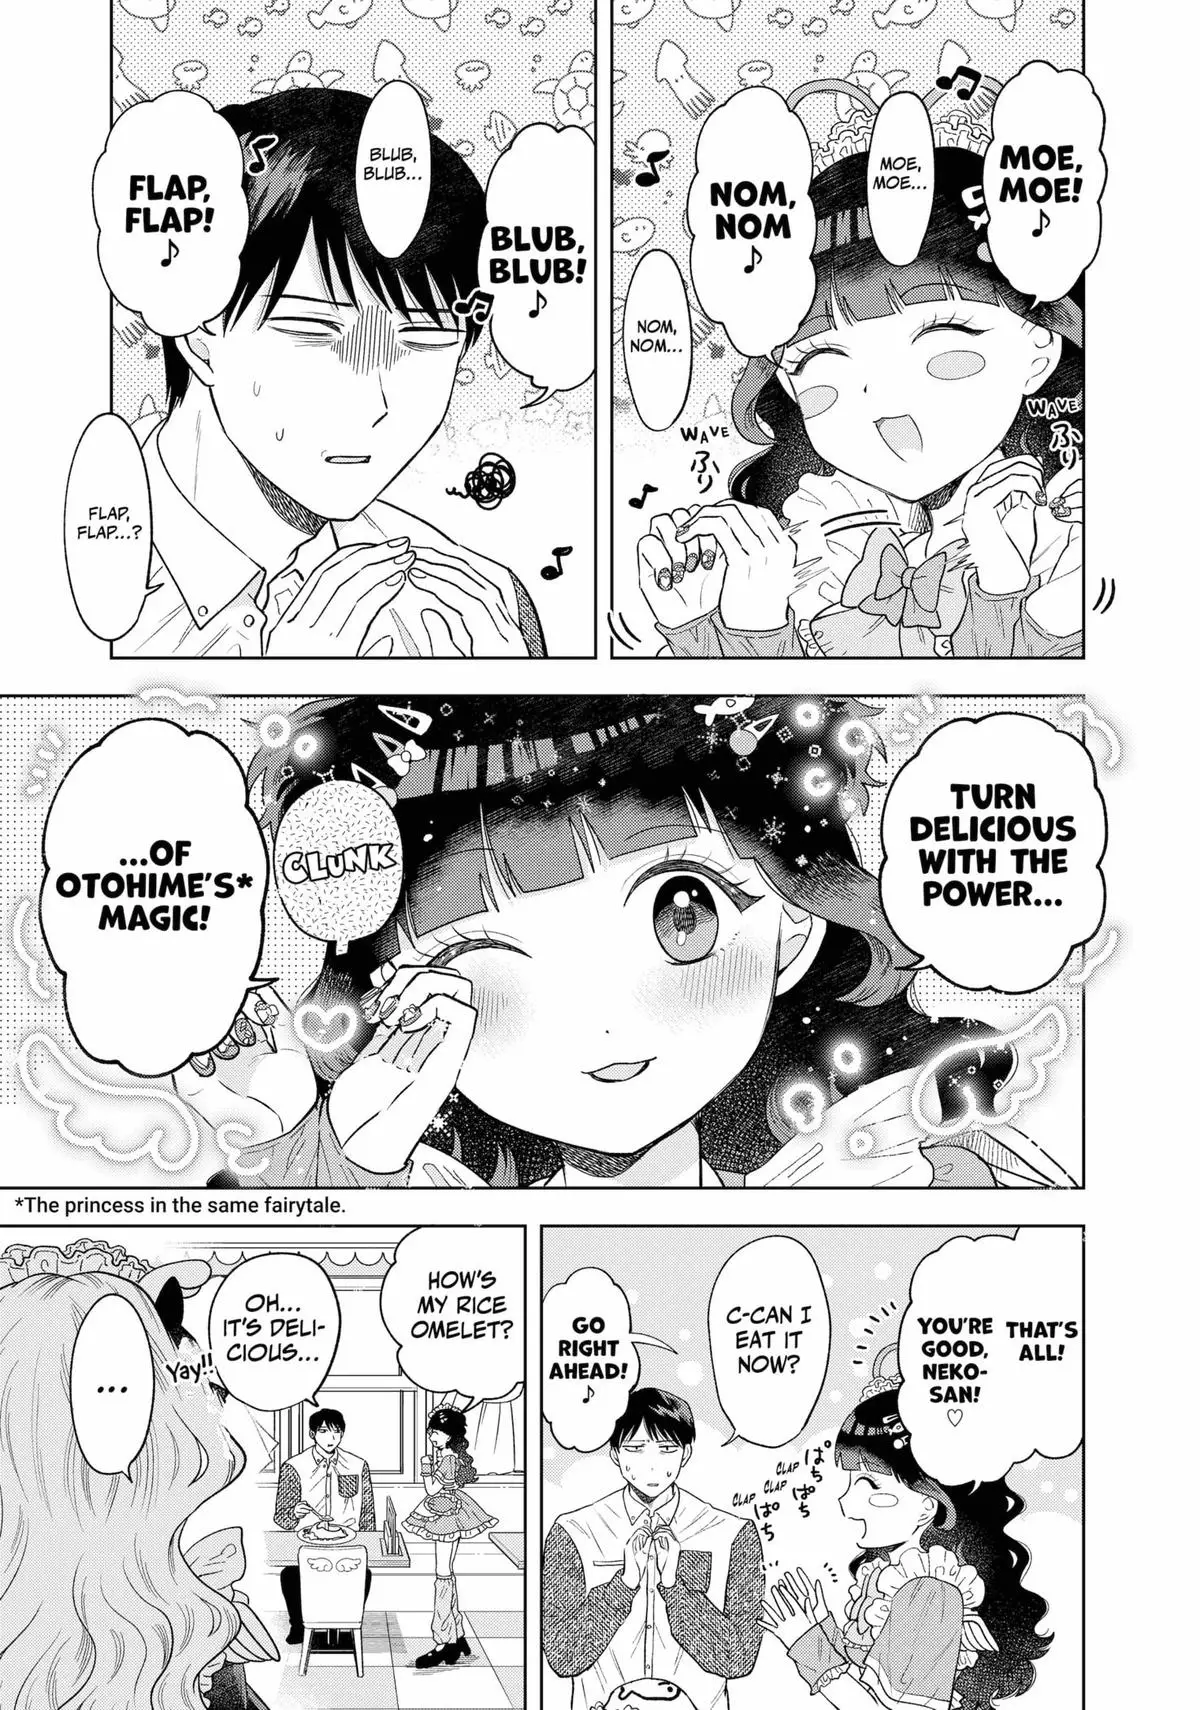 Tsuruko Returns The Favor - 5 page 9-673f08d1